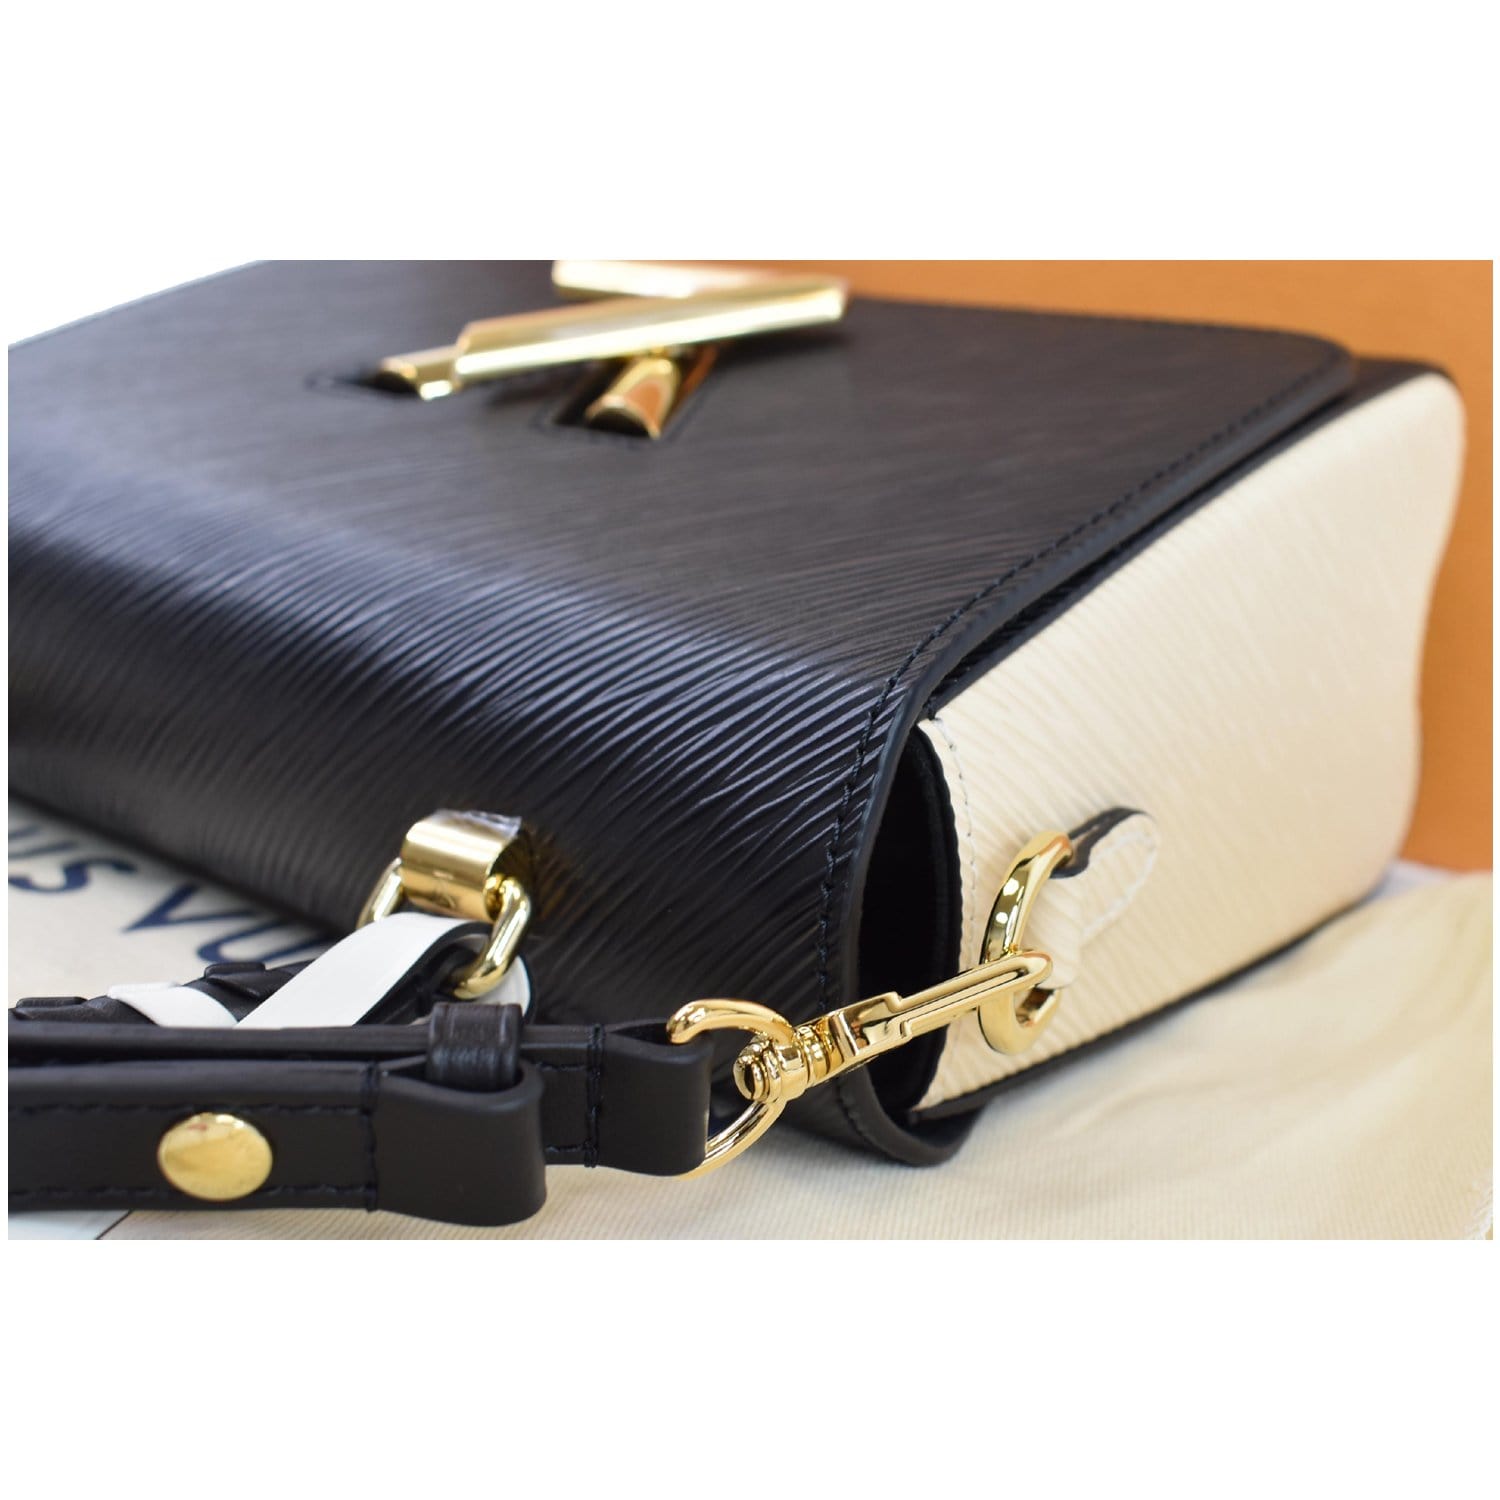 Black Louis Vuitton Epi Monogram Twist Wallet on Chain Crossbody Bag, Louis Vuitton Pallas Bag